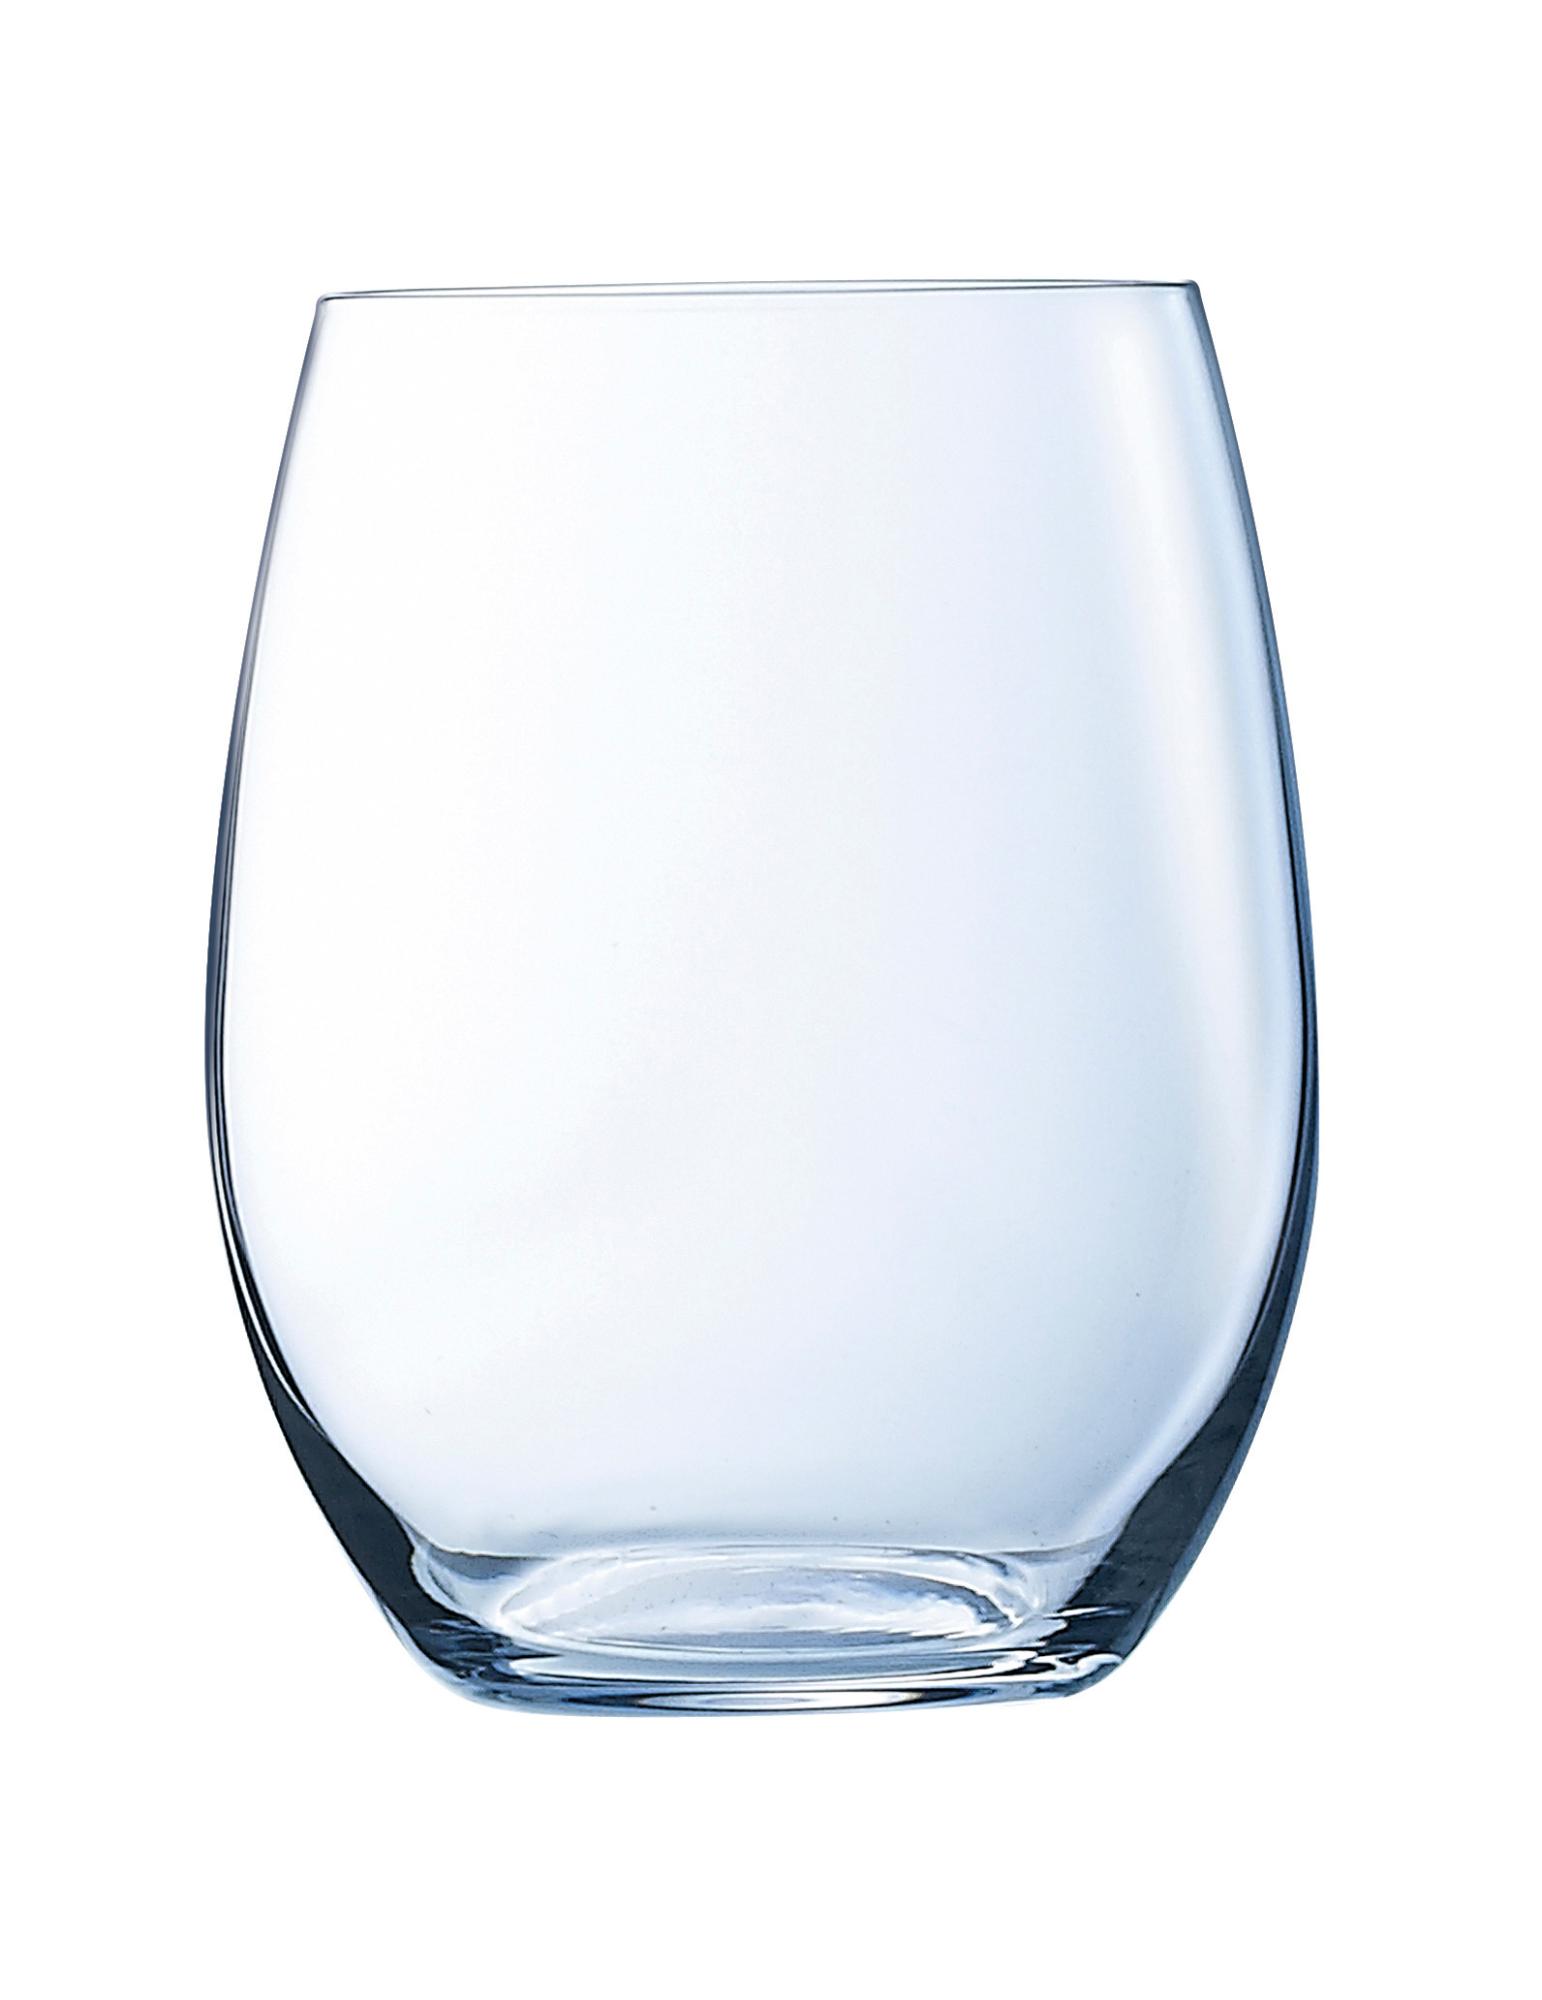 Primary glass, 360ml